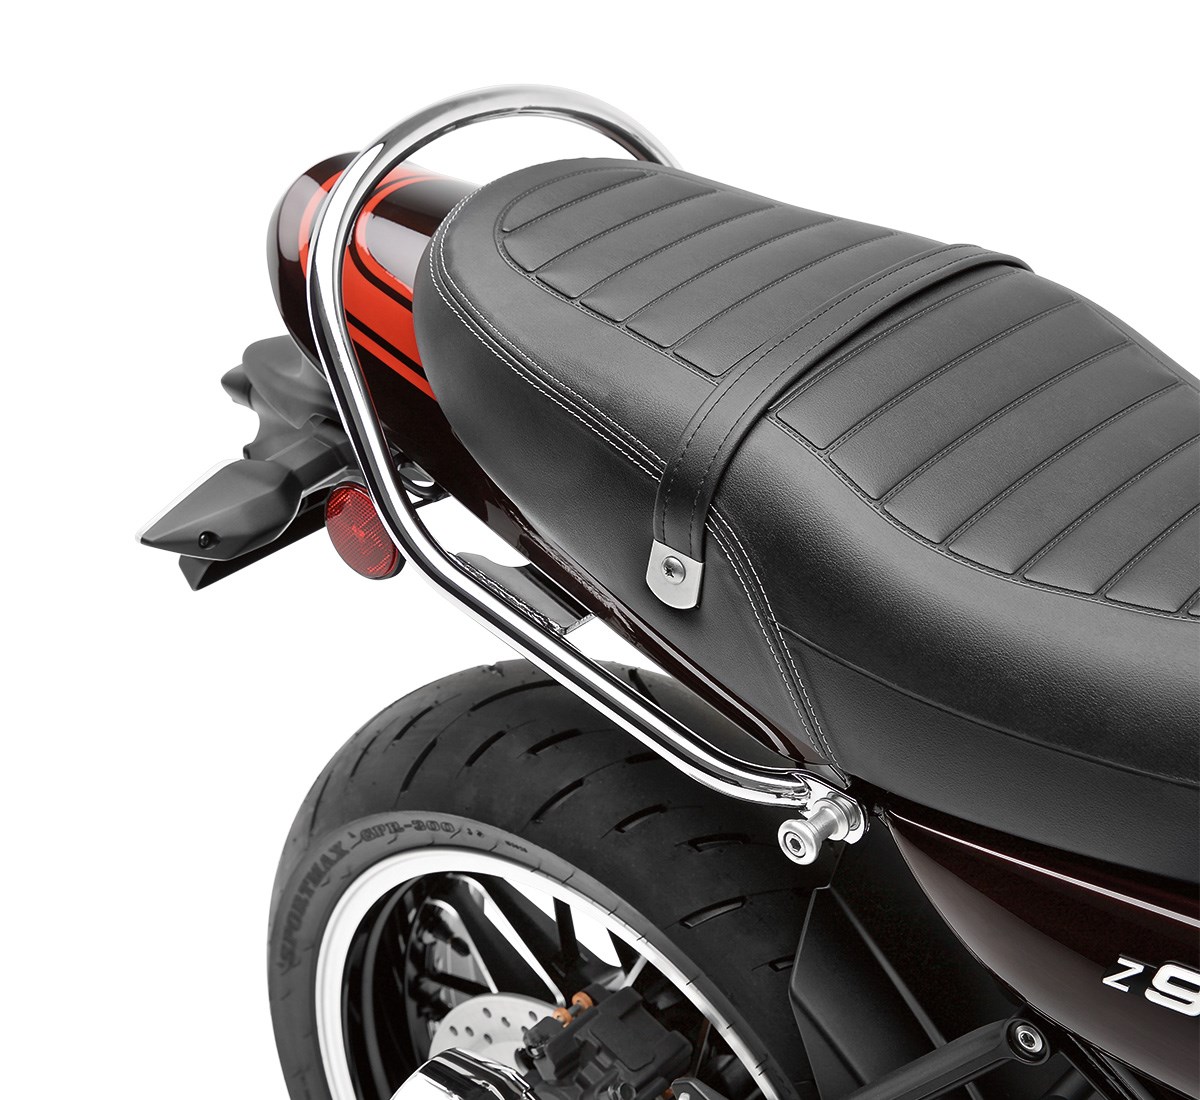 Black CNC Aluminum Alloy Rear Seat Rail Kit with Mounting Hardware Motorcycle Passenger Rear Grab Bars for Kawasaki Z650 17-18 